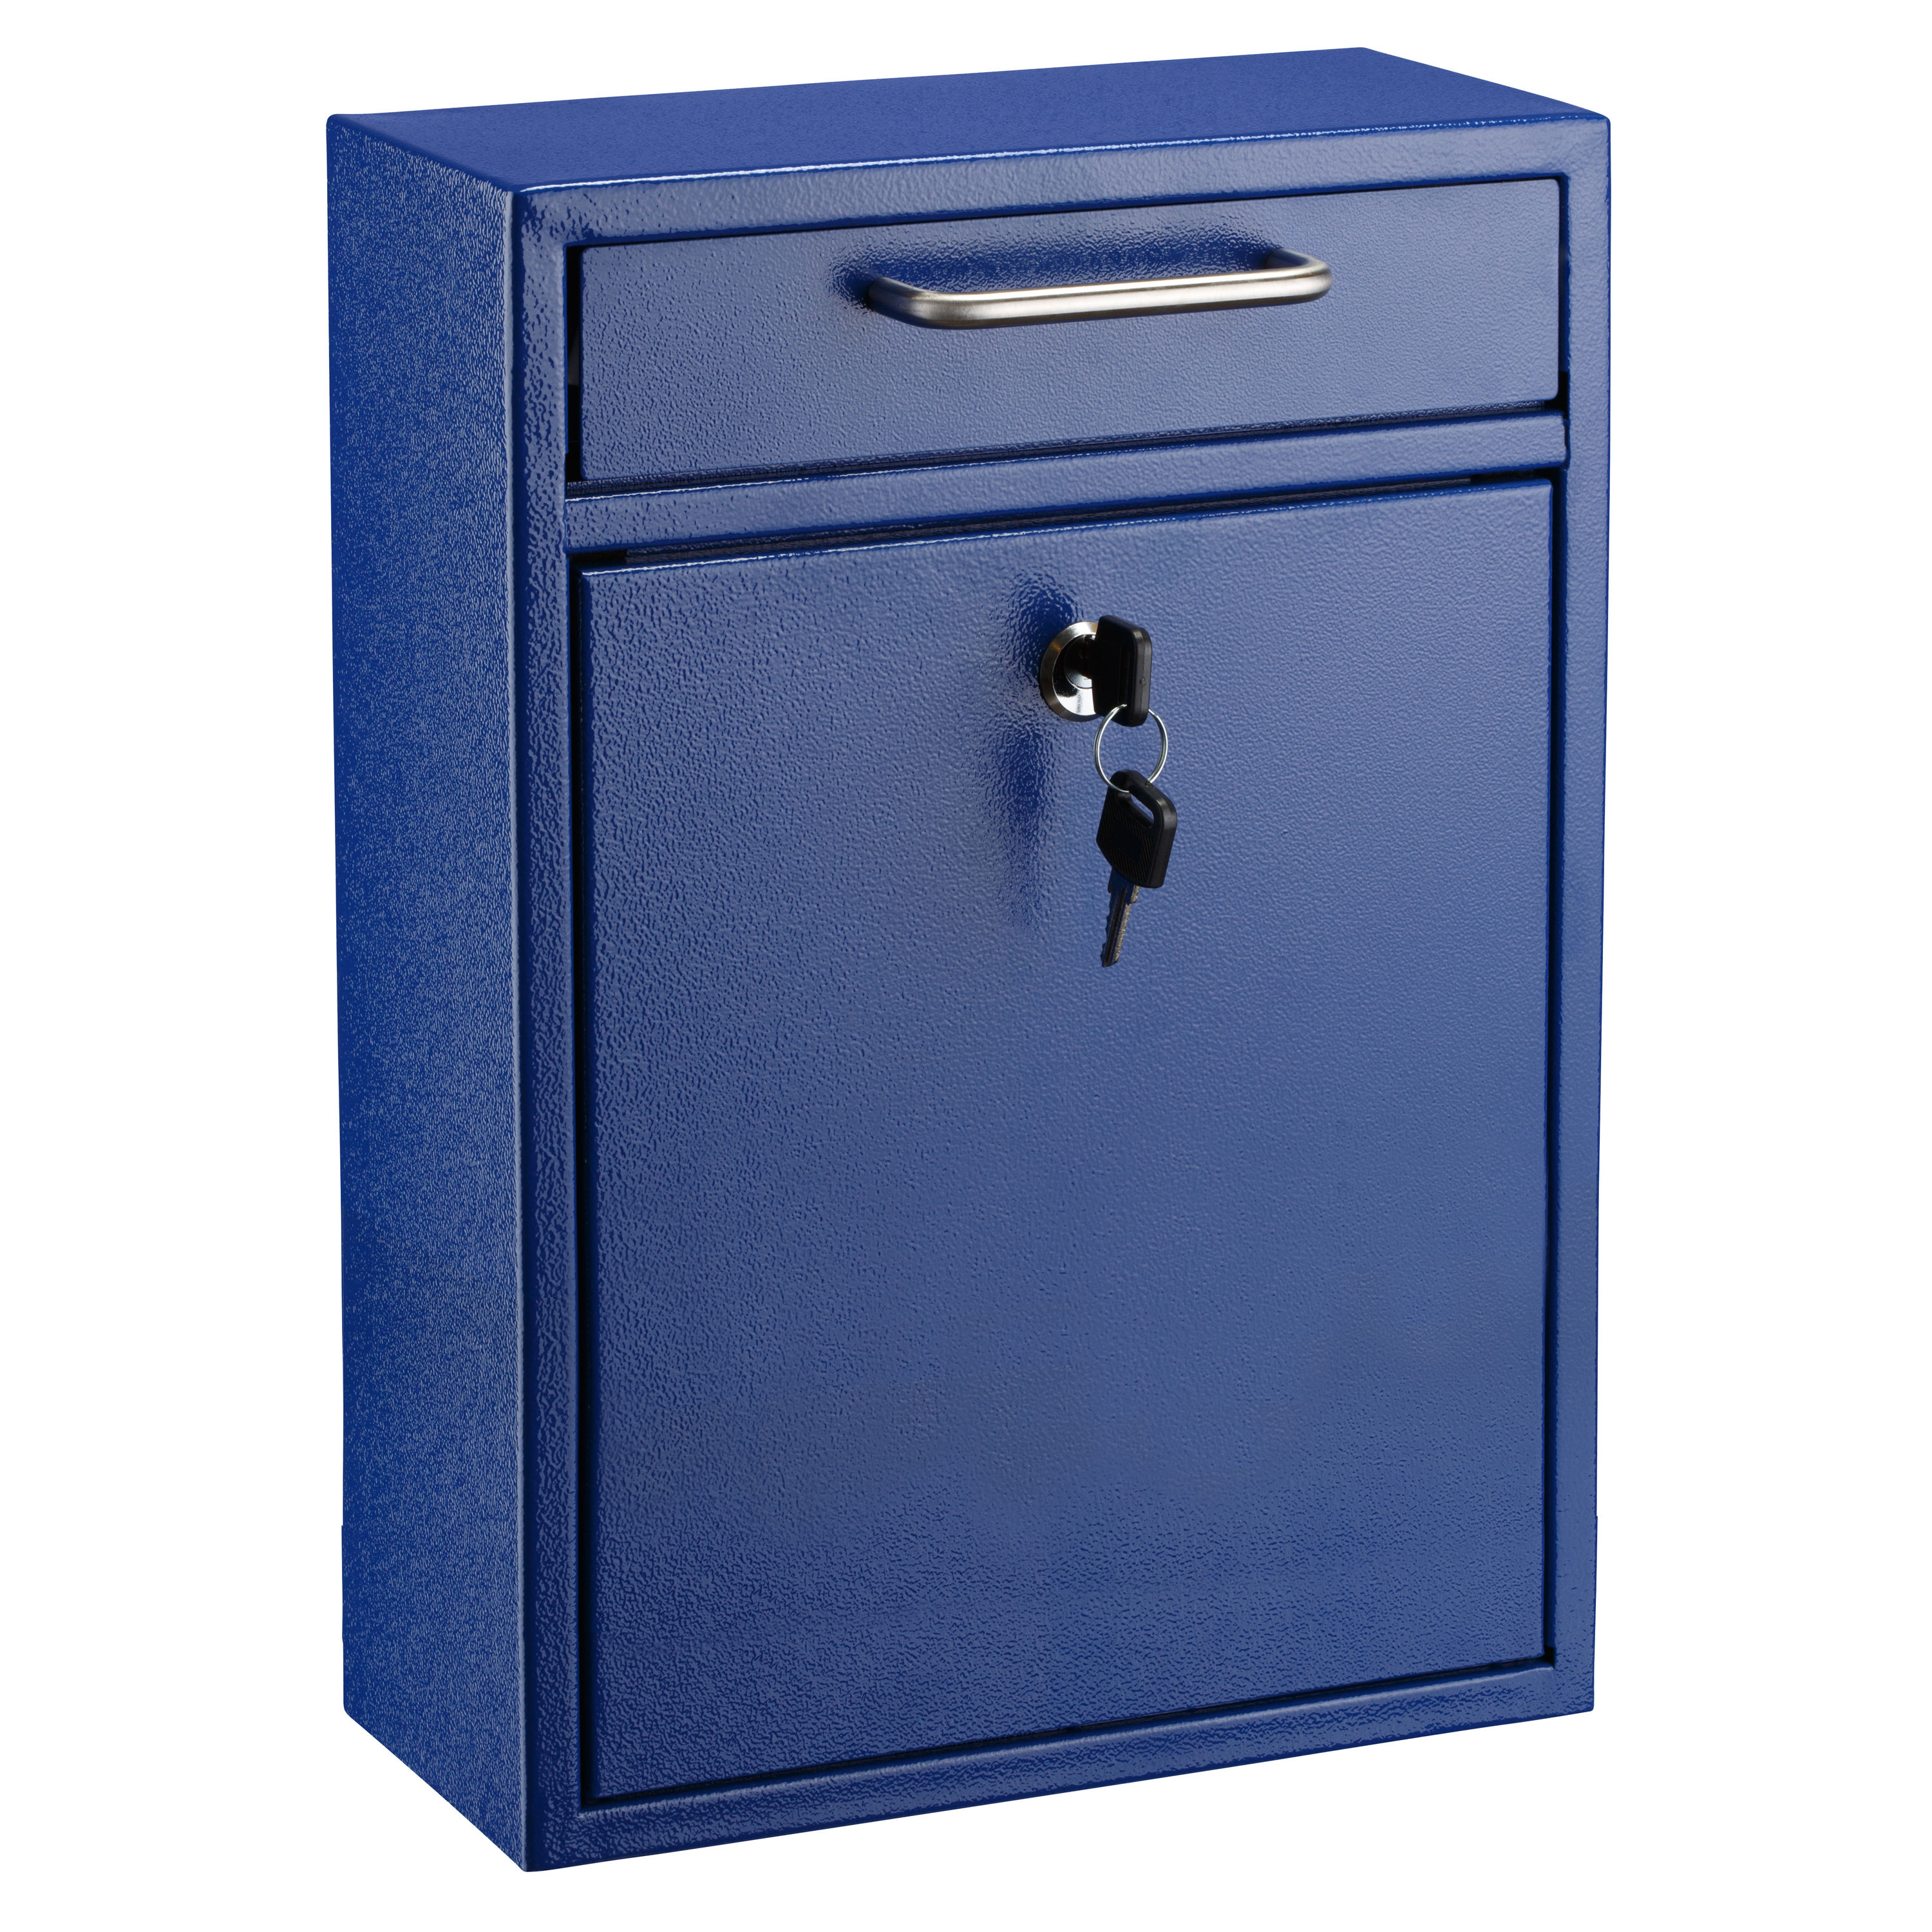 AdirOffice Blue Coated Steel Home Business Lock Mailbox Parcel Storage Drop Box